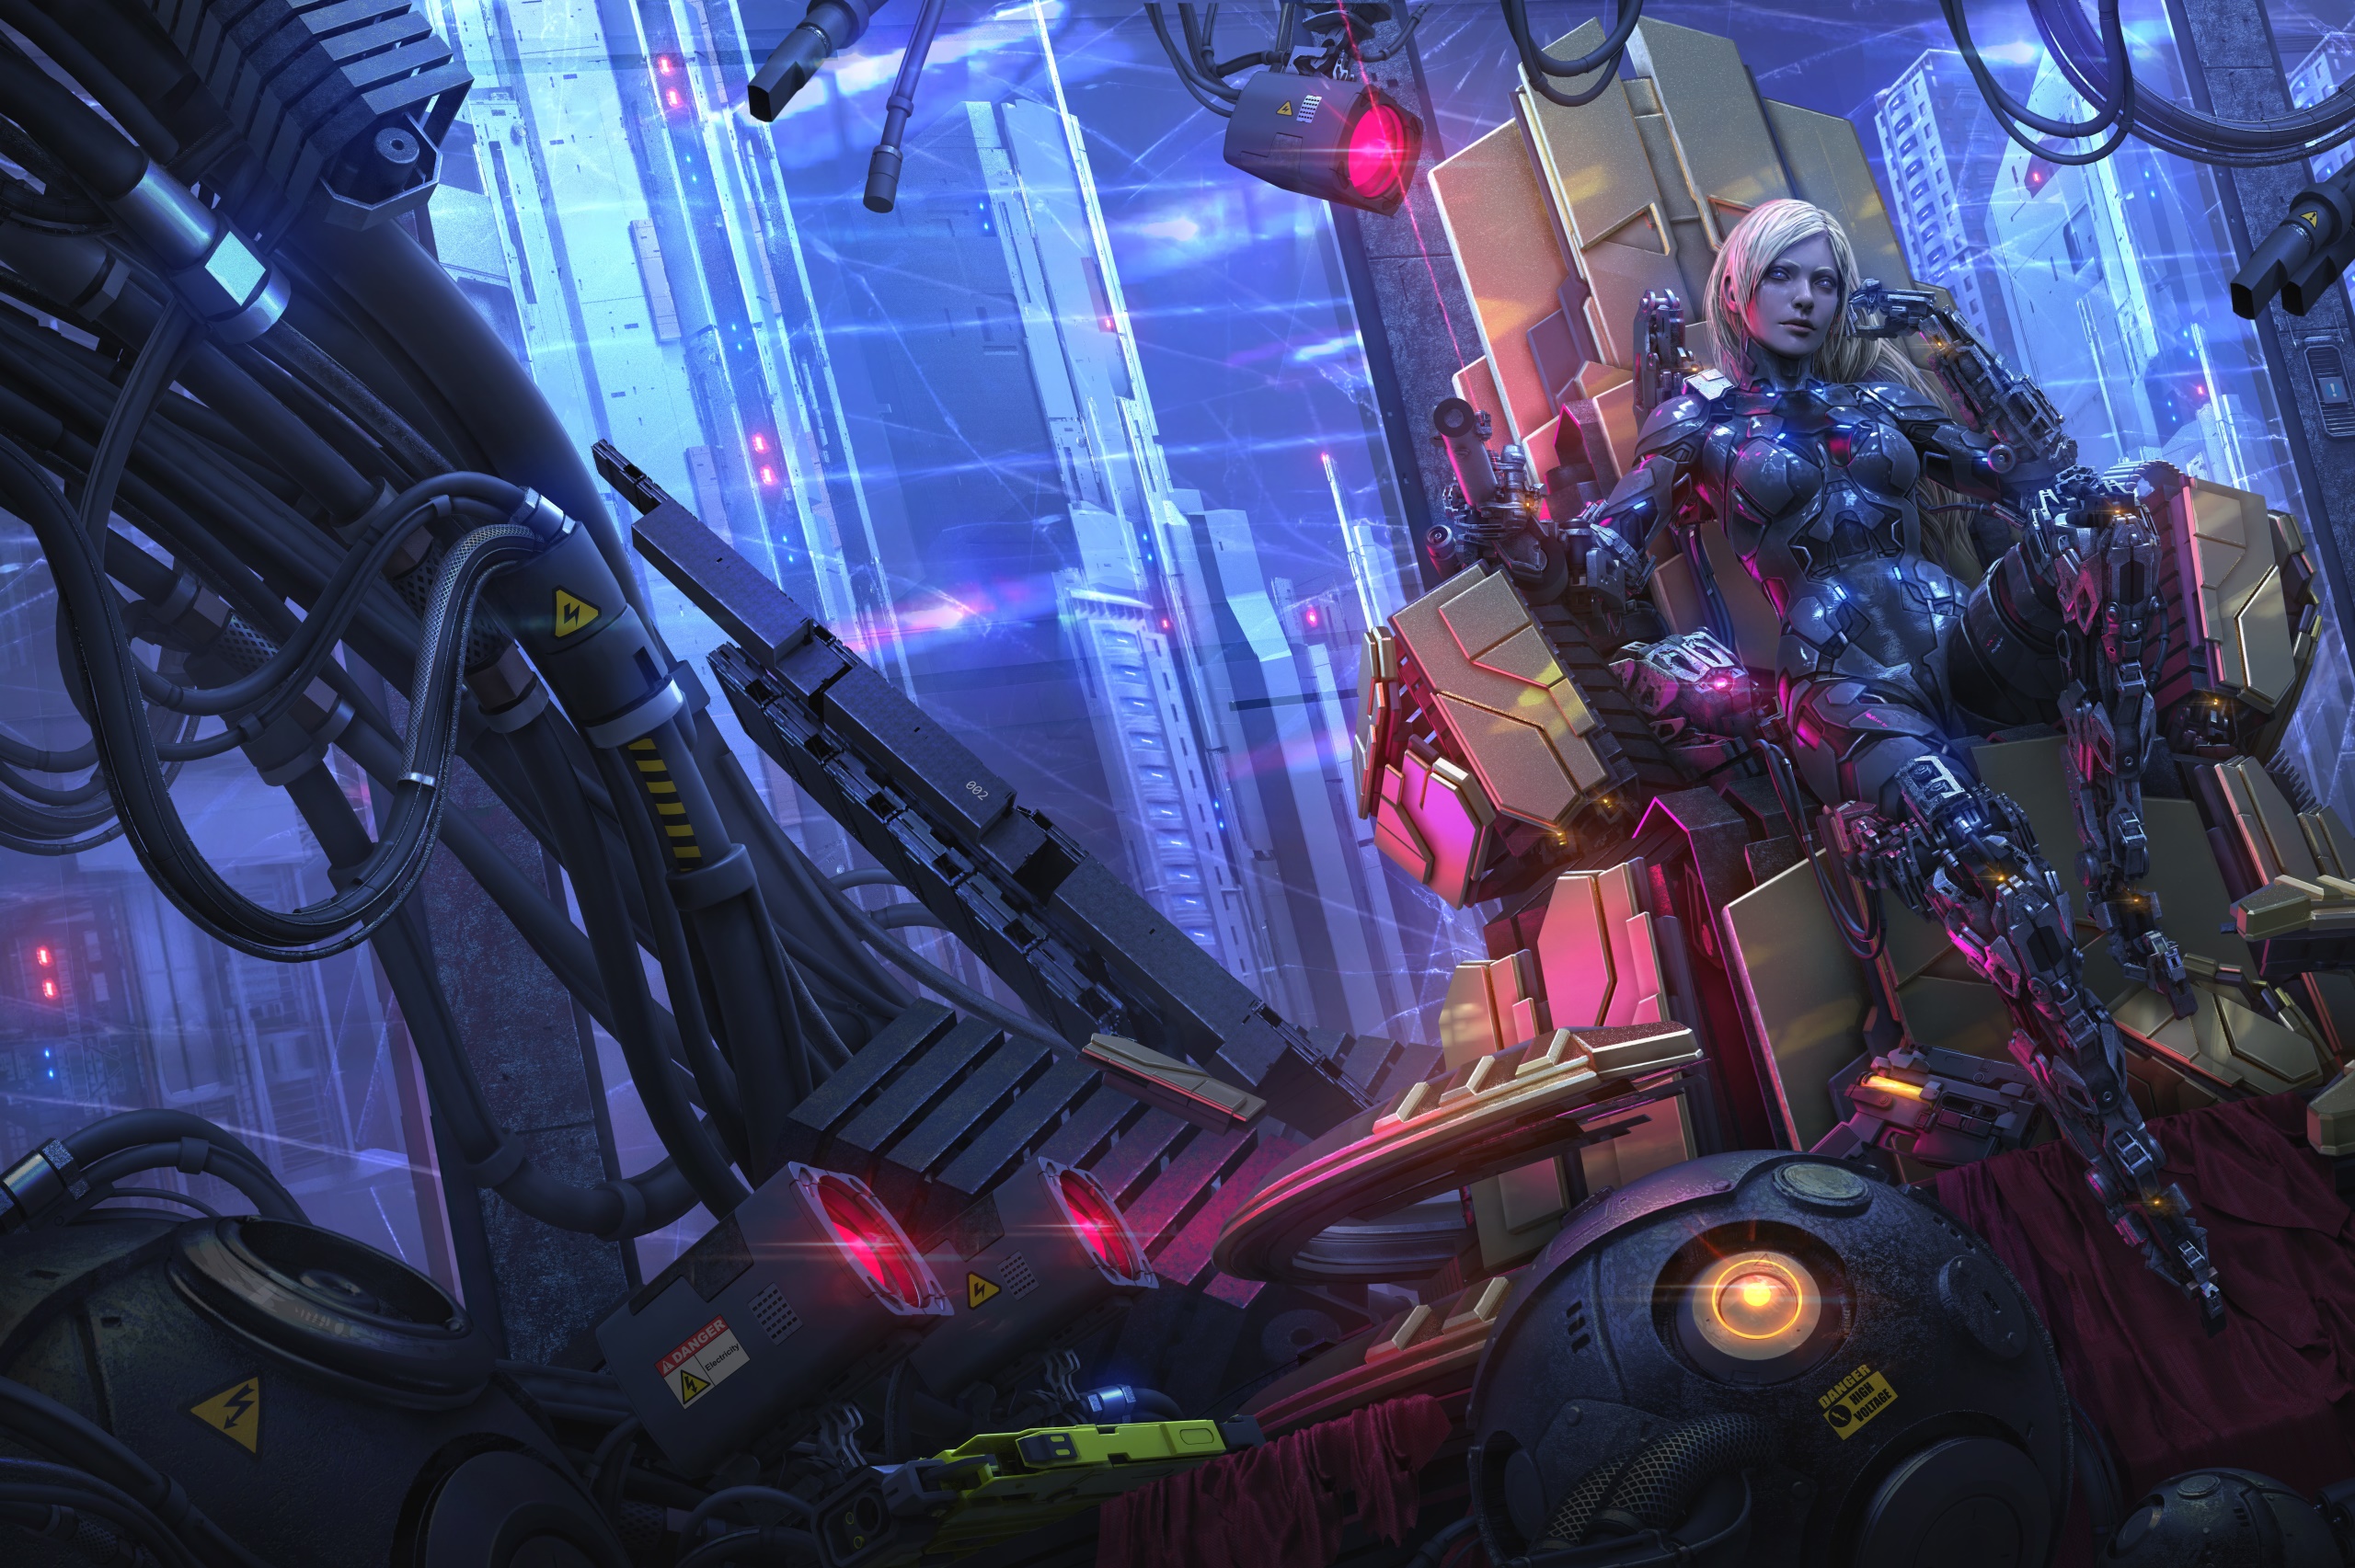 General 2560x1705 cyberpunk futuristic science fiction artwork women digital art